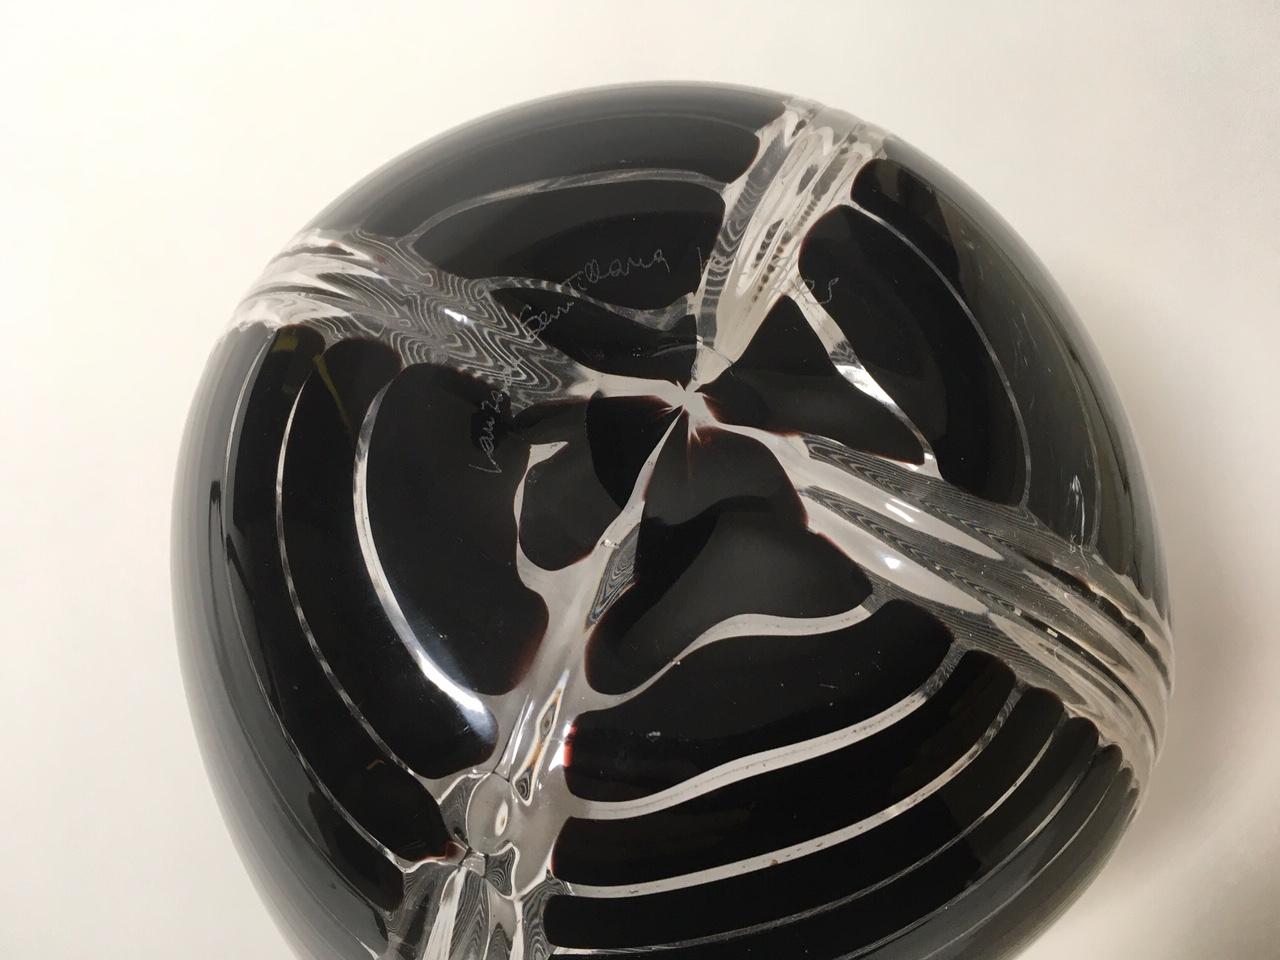 Italian Murano Glass Vase Diavolo Model by Laura Diaz de Santillana for Eos. 1